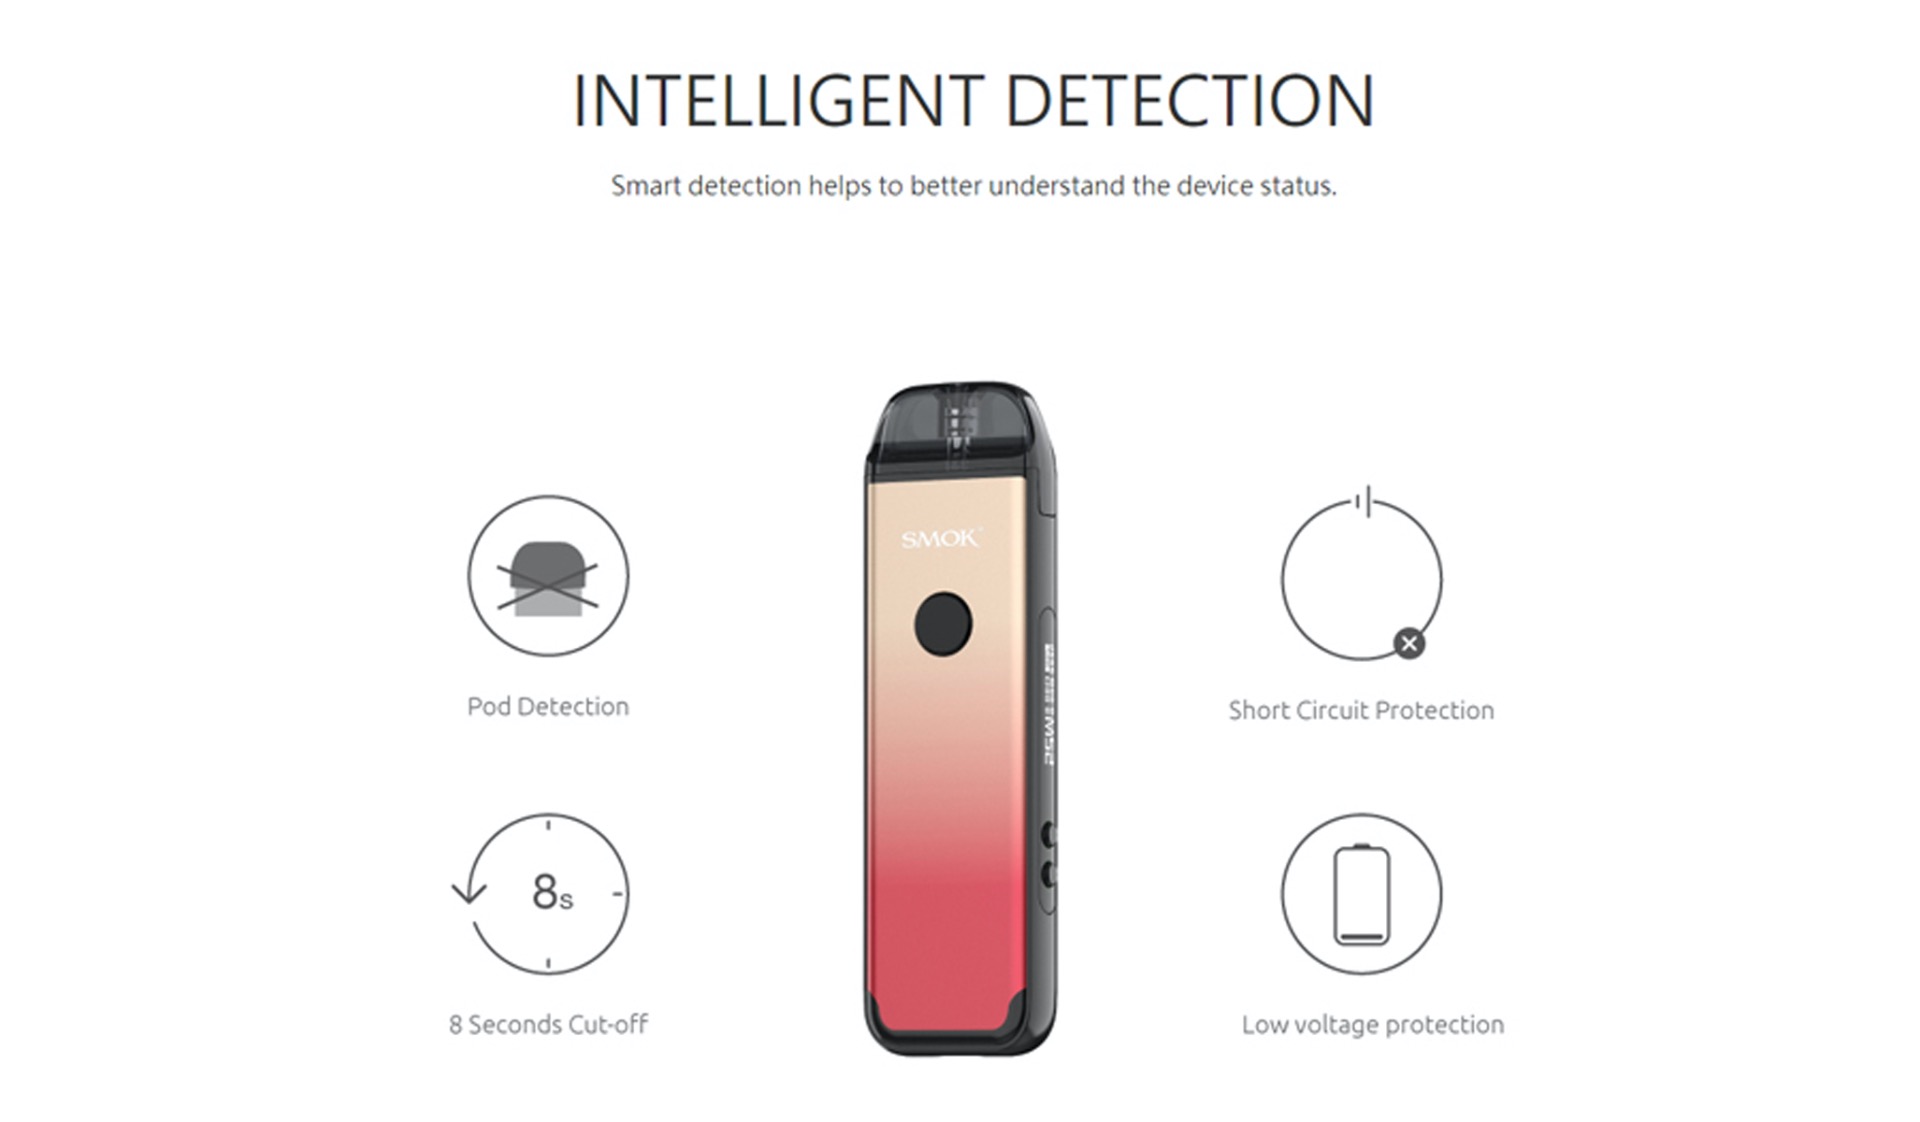 intelligent detection